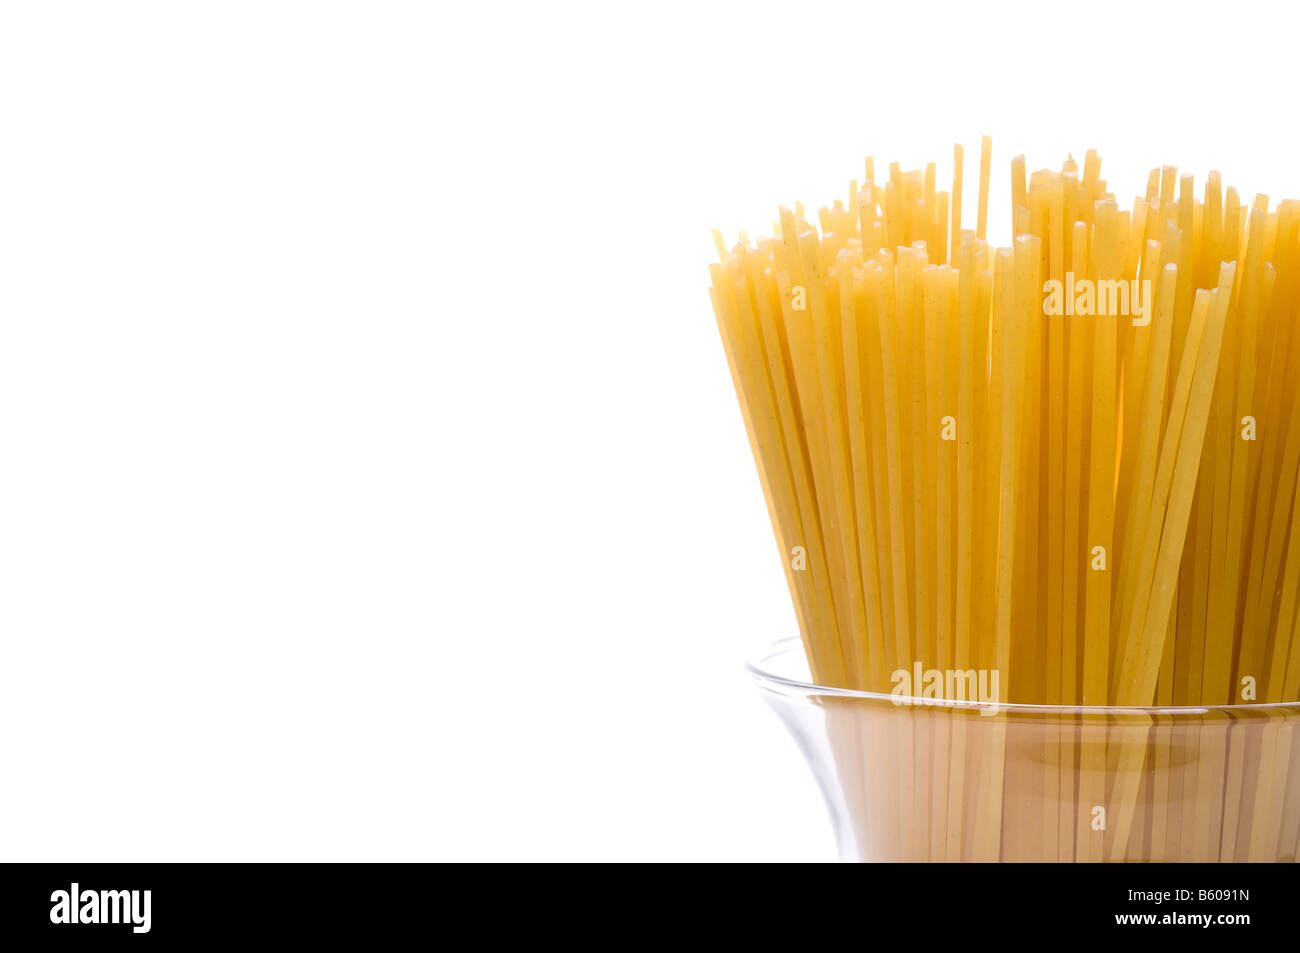 A bundle of spaghetti in a jar Stock Photo